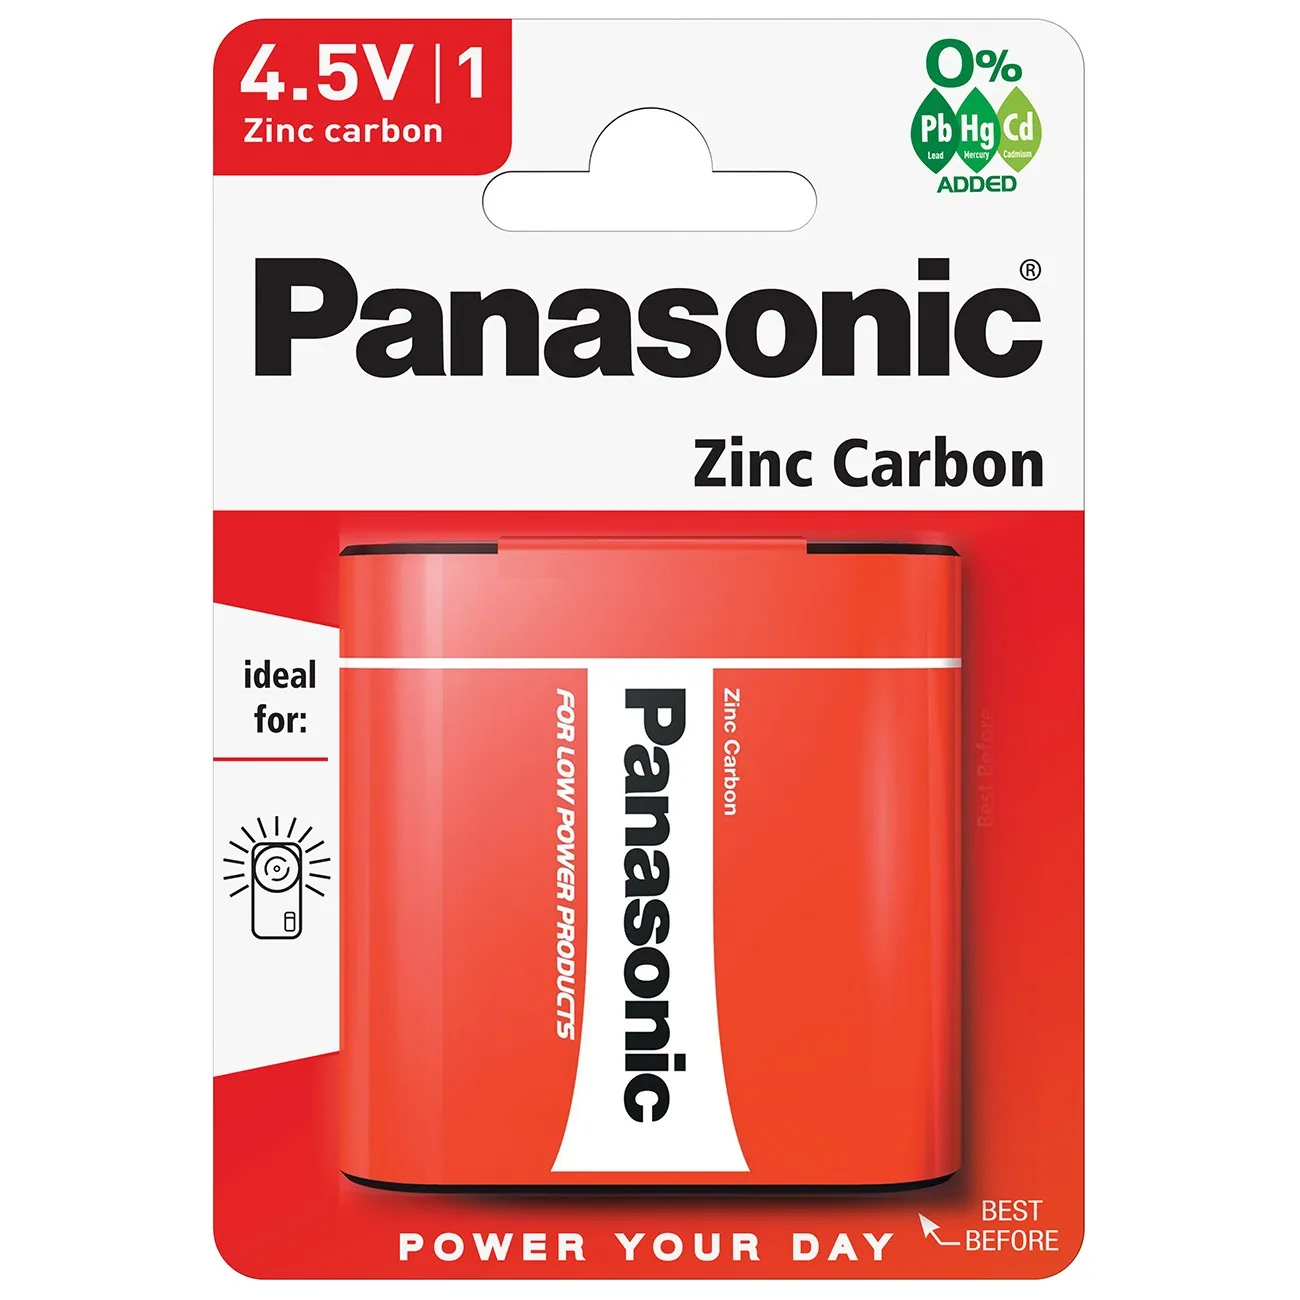 Batterie 4,5V piatta Zinco Carbone Panasonic 3R12RZ/1BP Blister da 1 pezzo